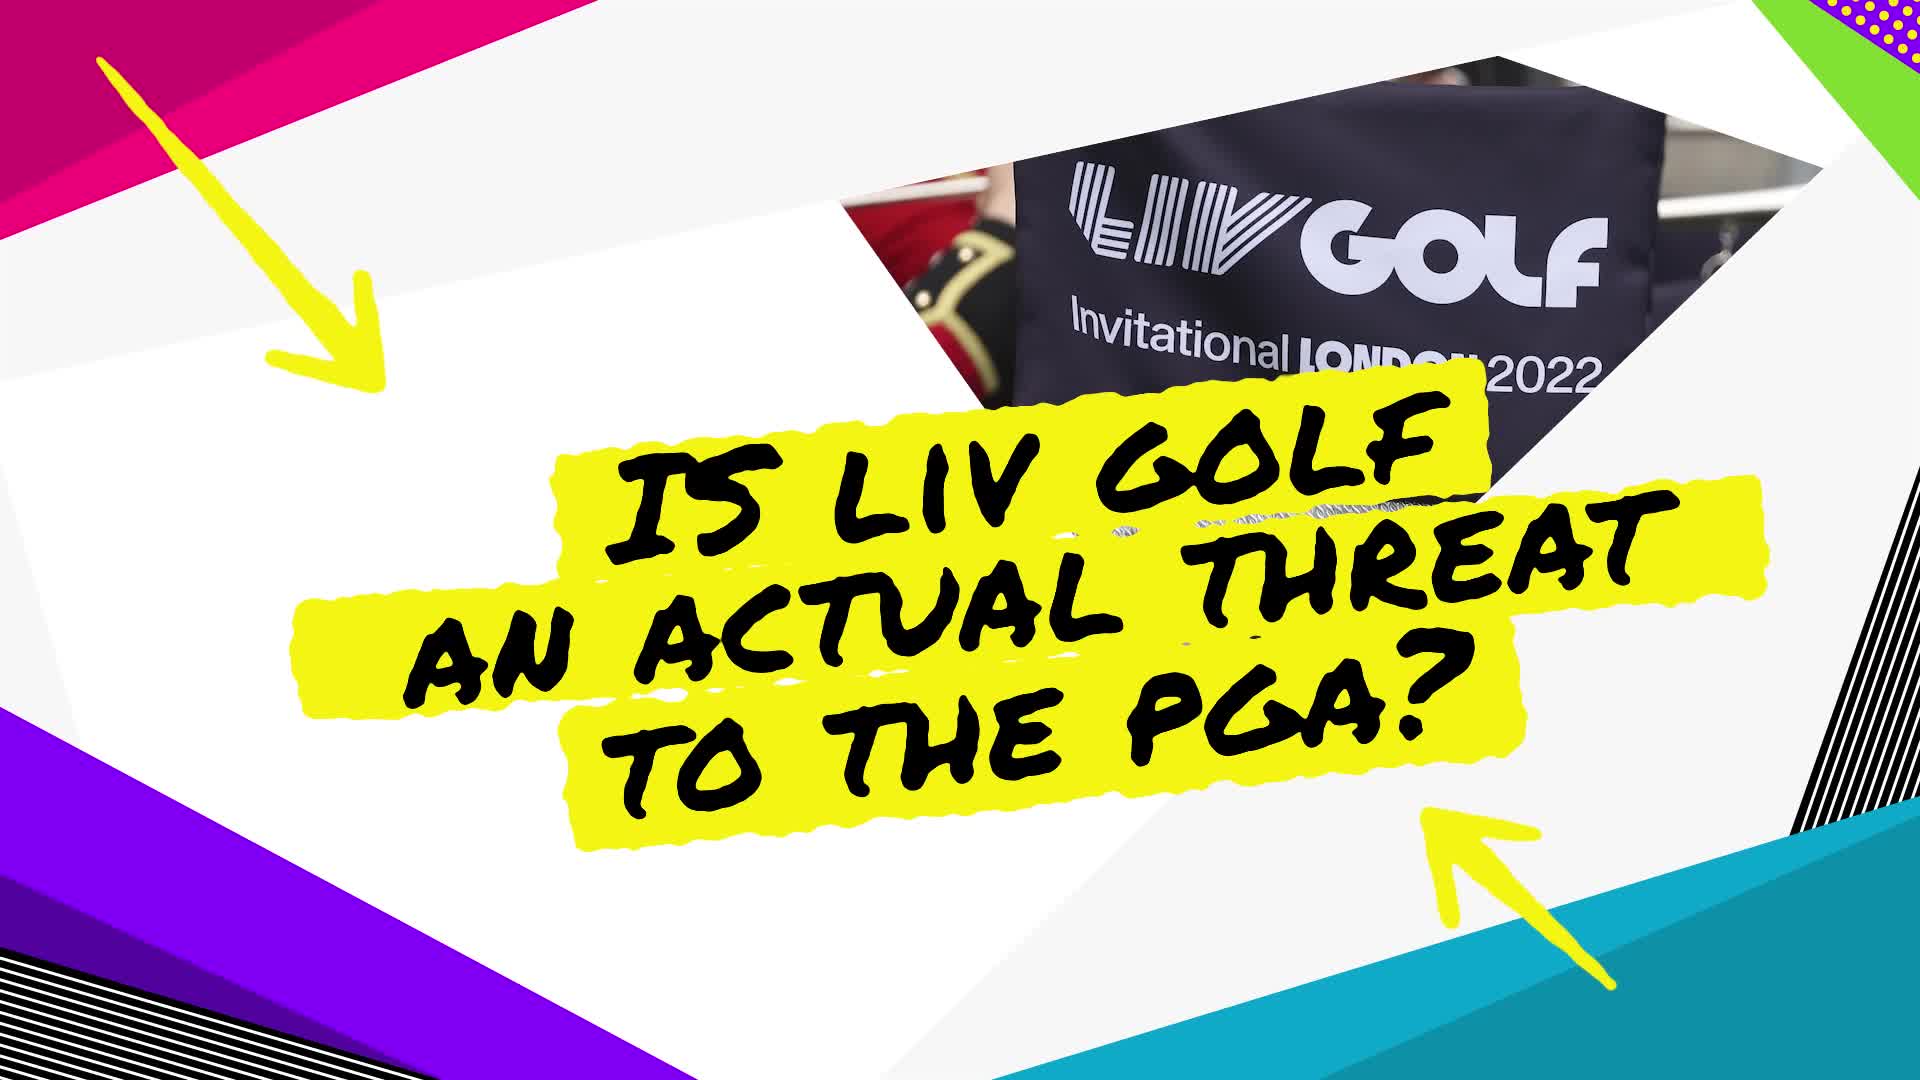 Greg Norman Talks Up TV Network Interest In LIV Golf